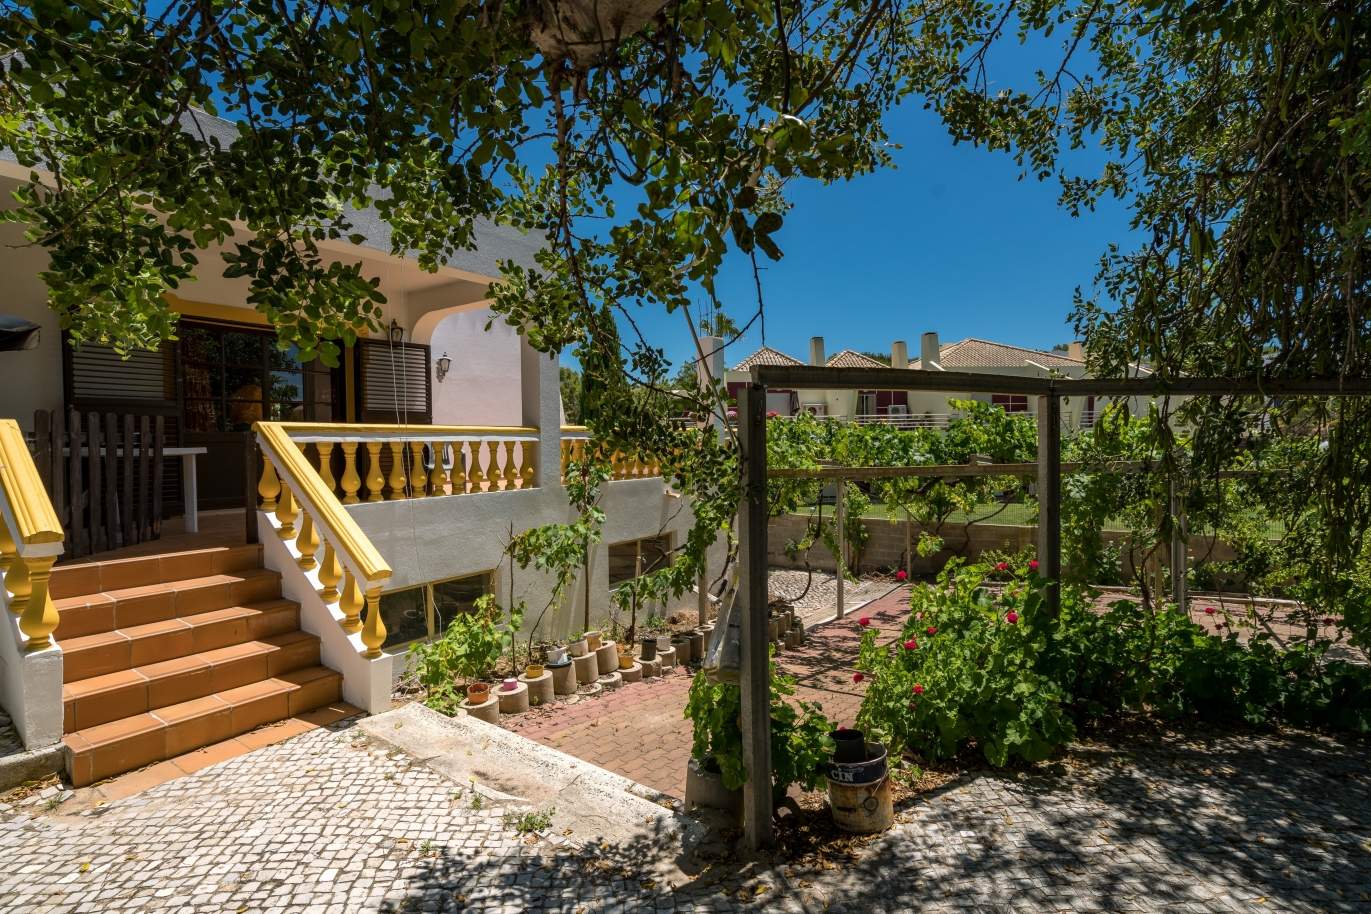 4 Bedroom Villa with plot of land, sale, Albufeira, Algarve, Portugal_143782